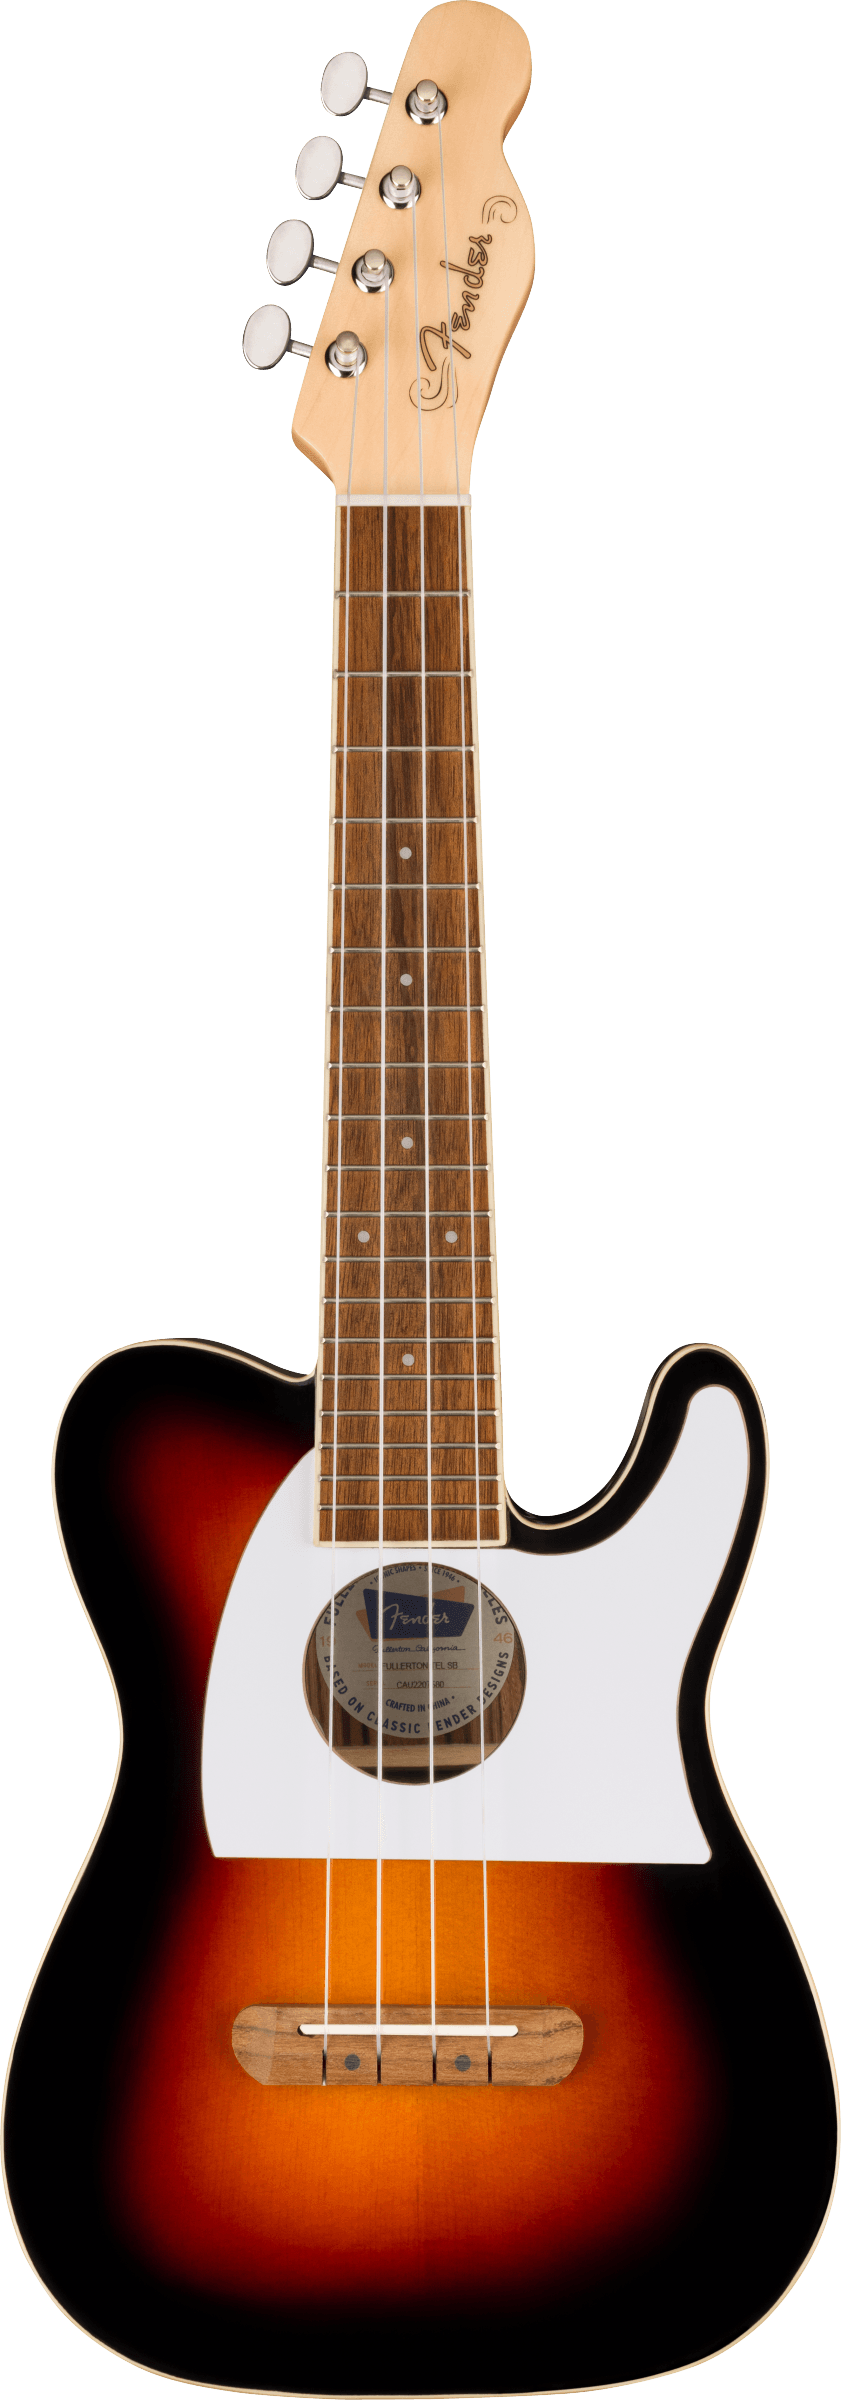 Fender Fullerton Tele Ukulele, Walnut Fingerboard, 2-Color Sunburst